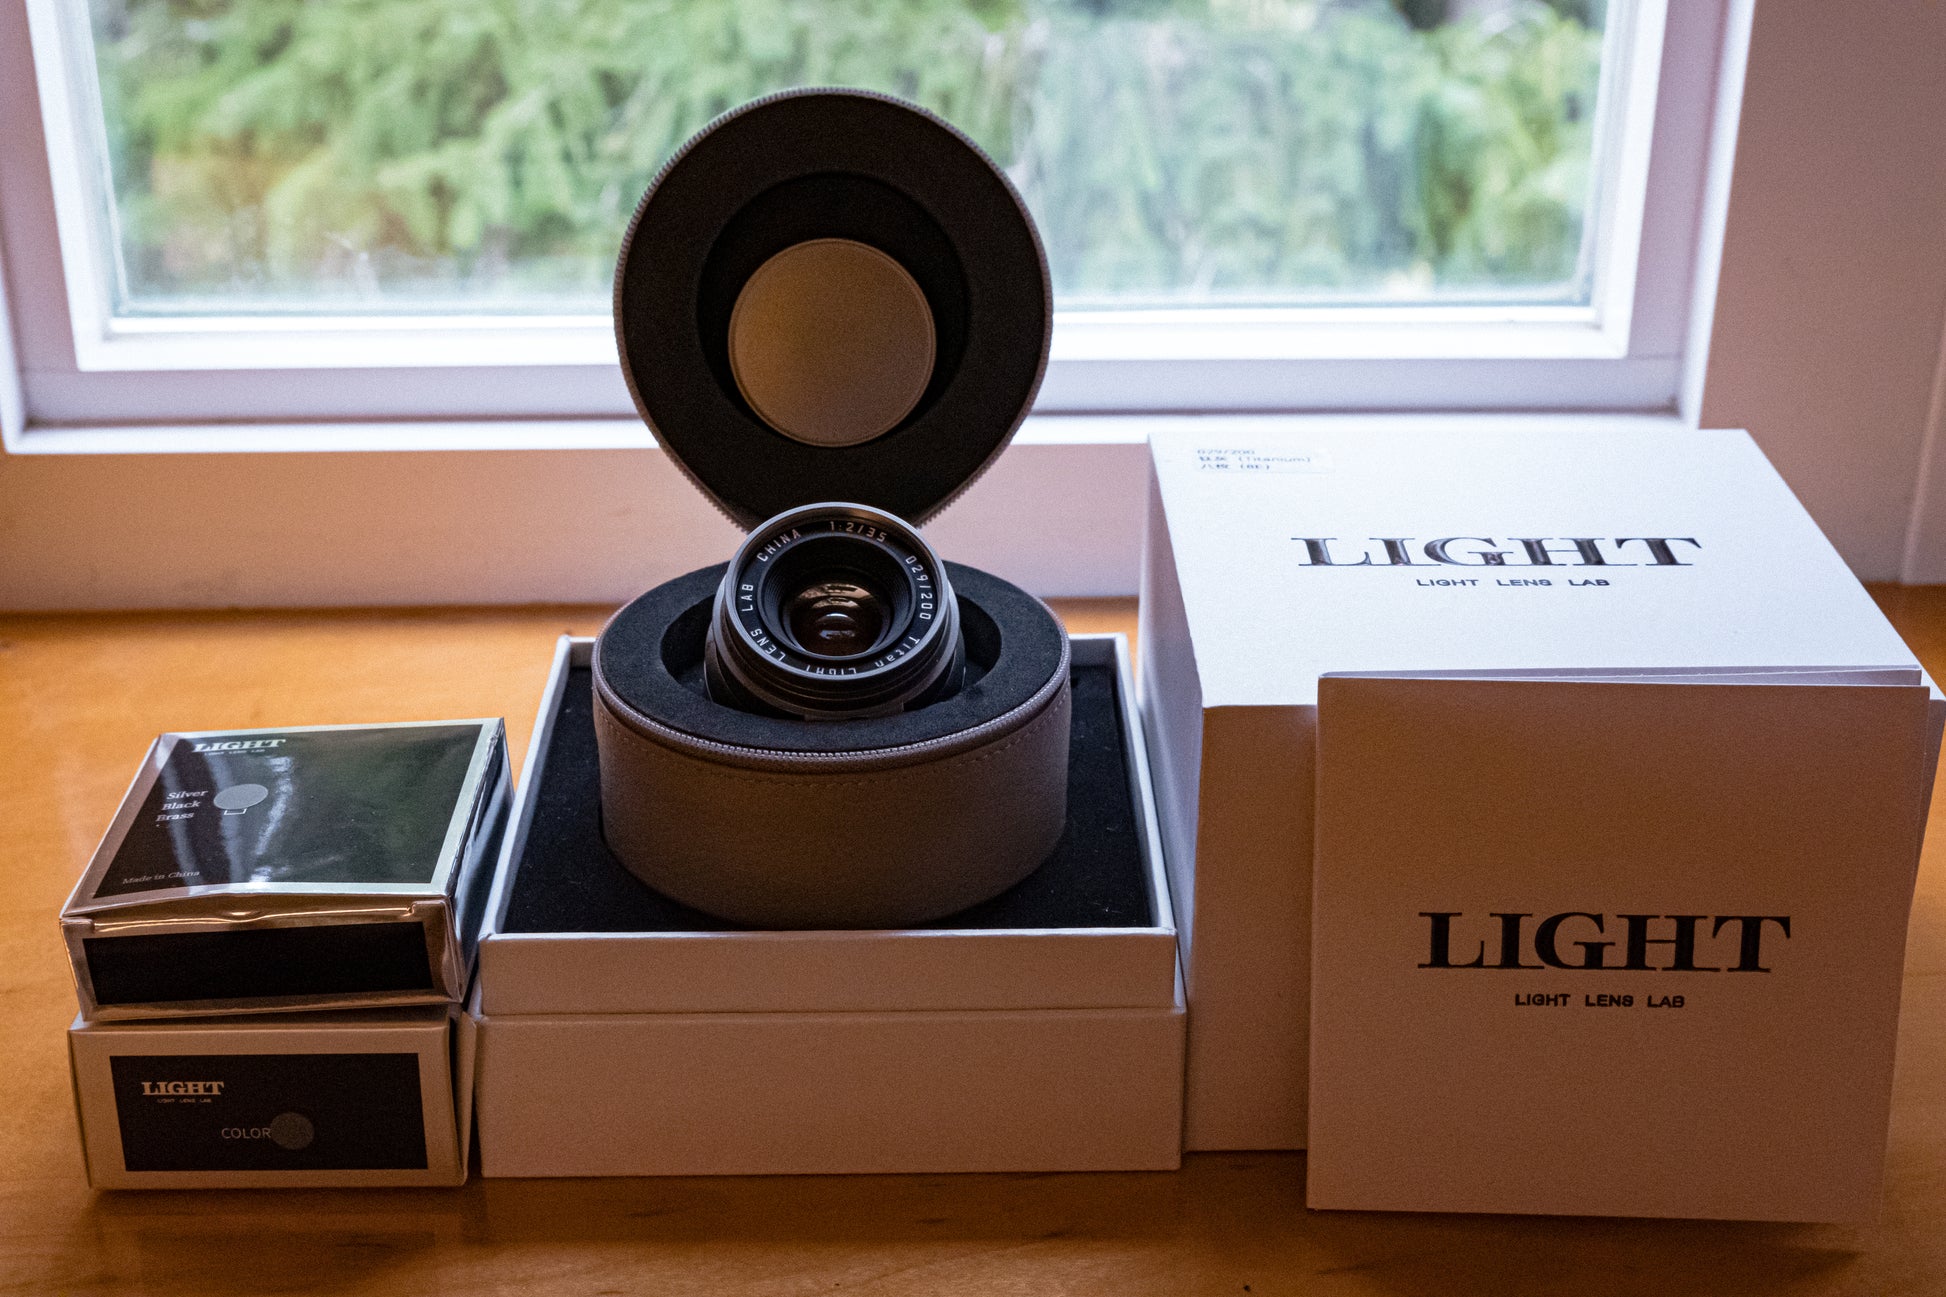 Light Lens Lab